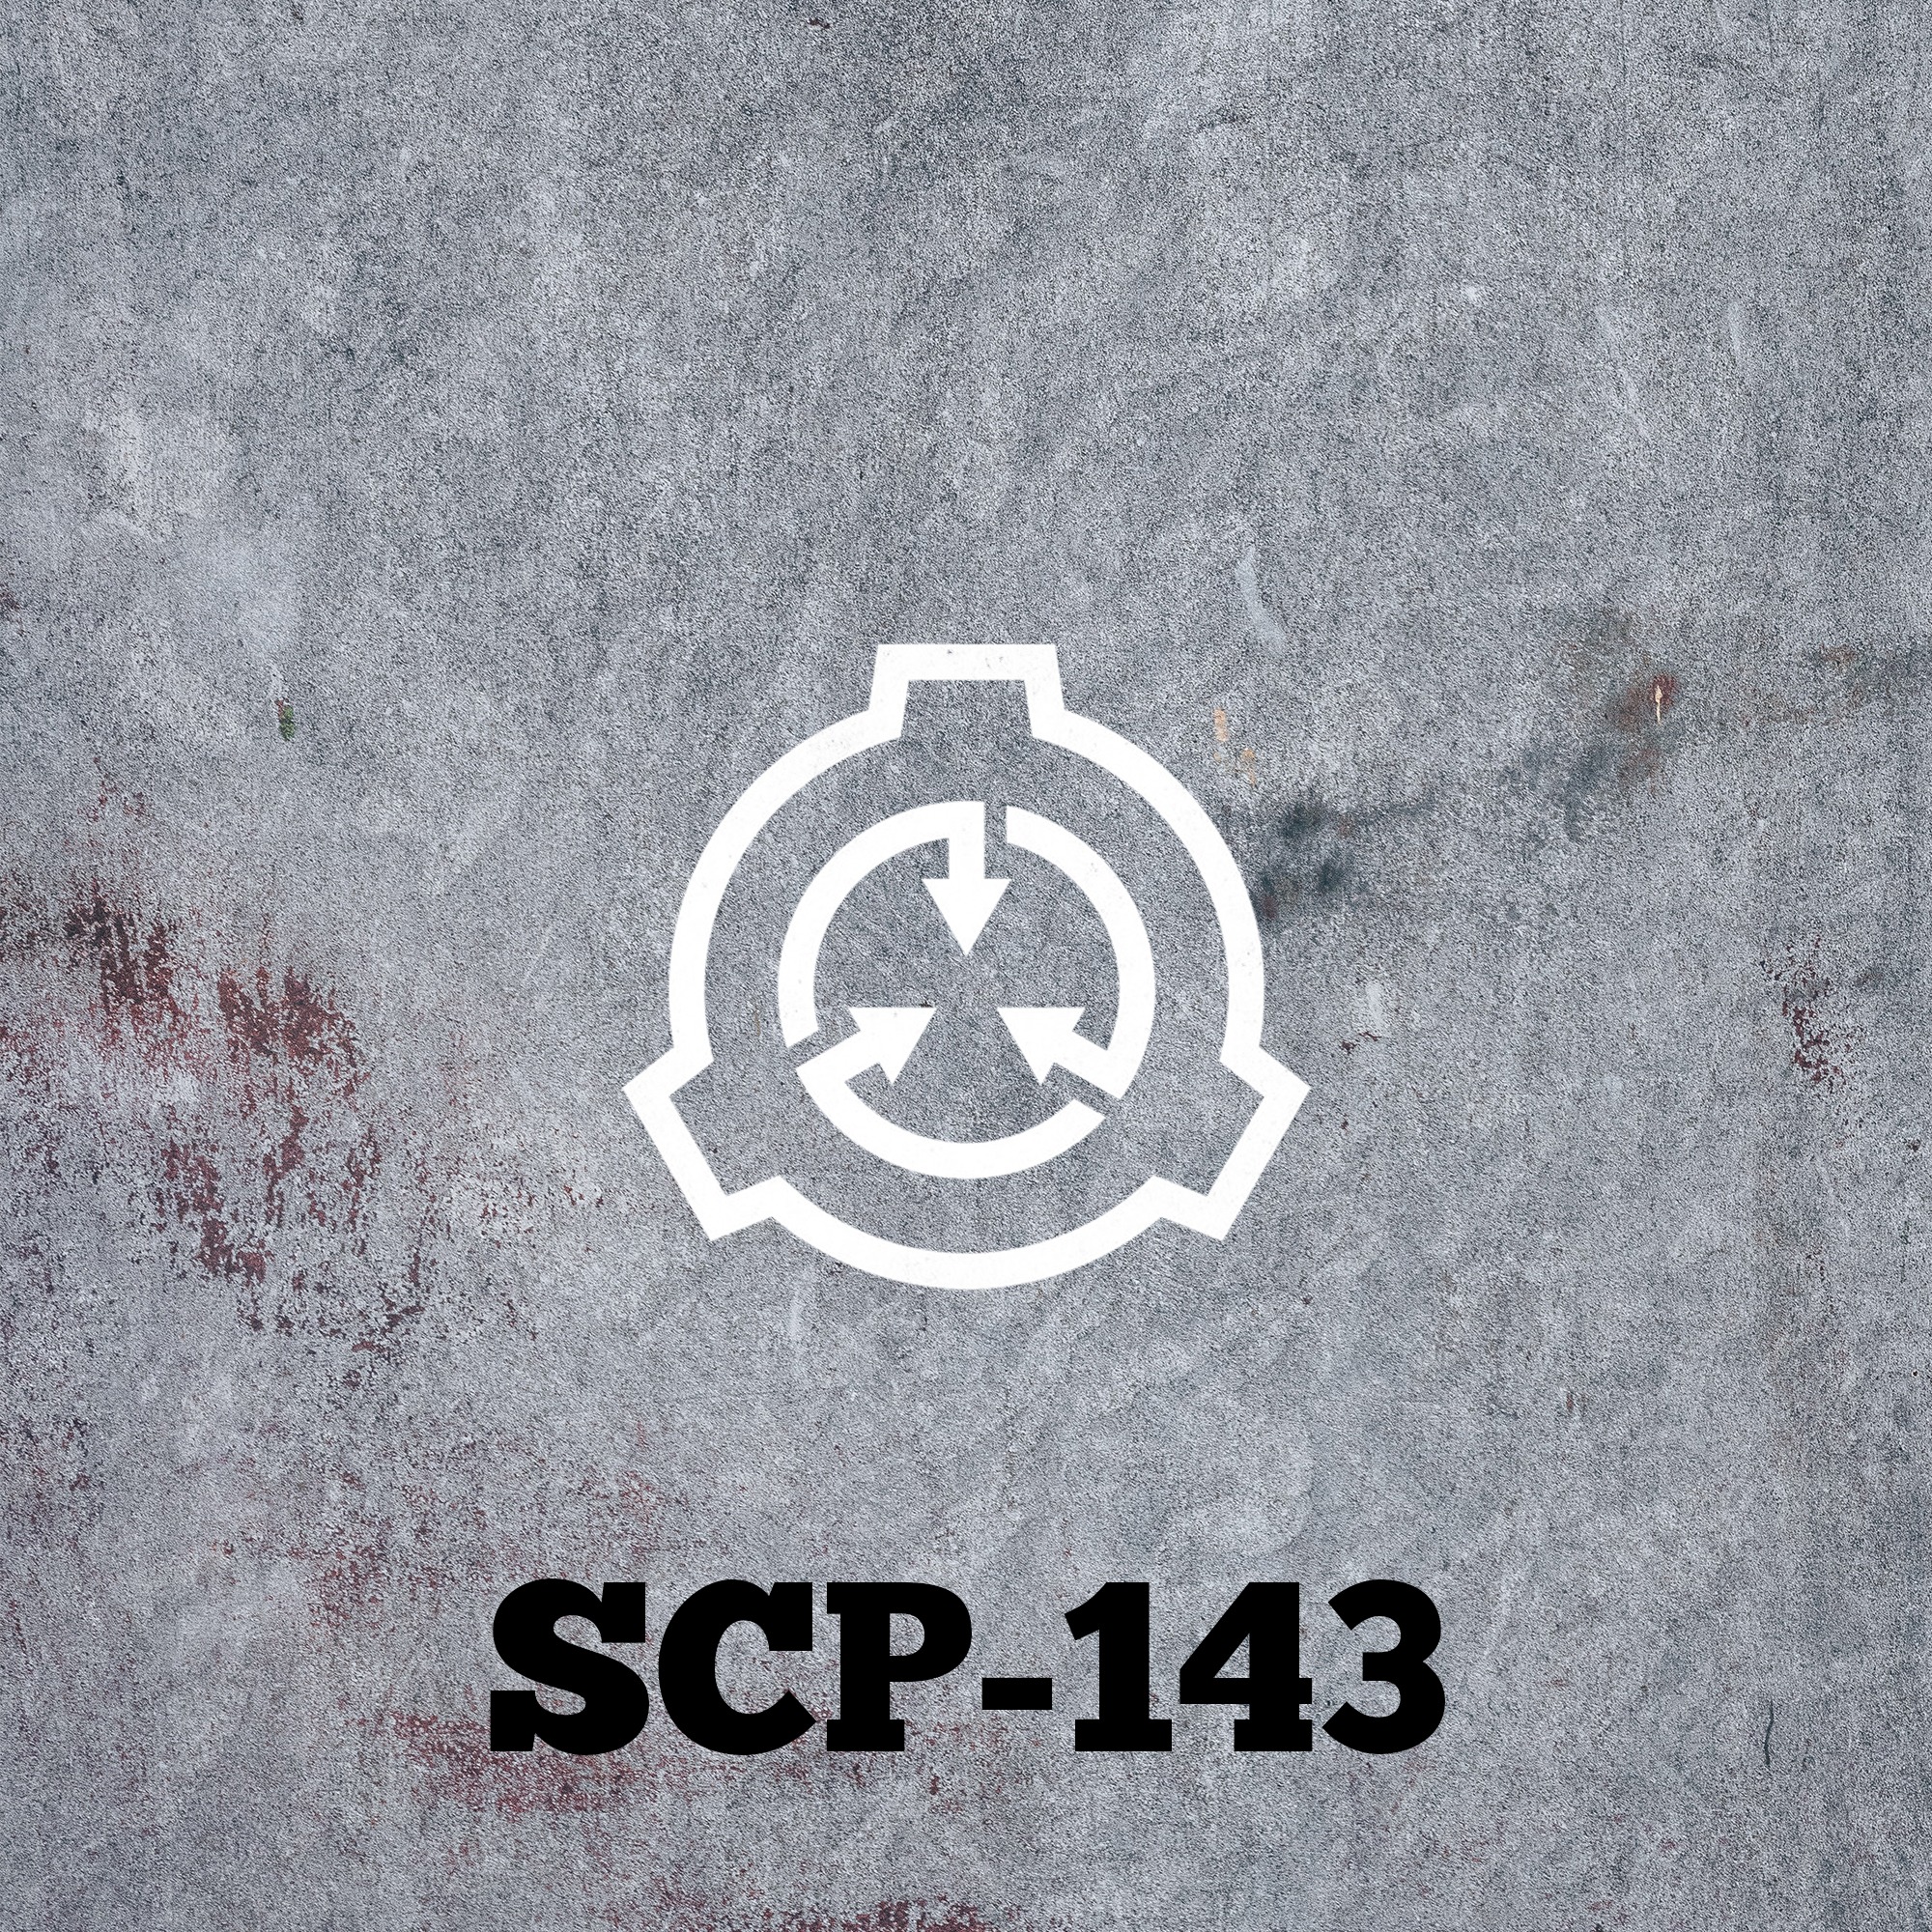 SCP-143: The Bladewell Grove